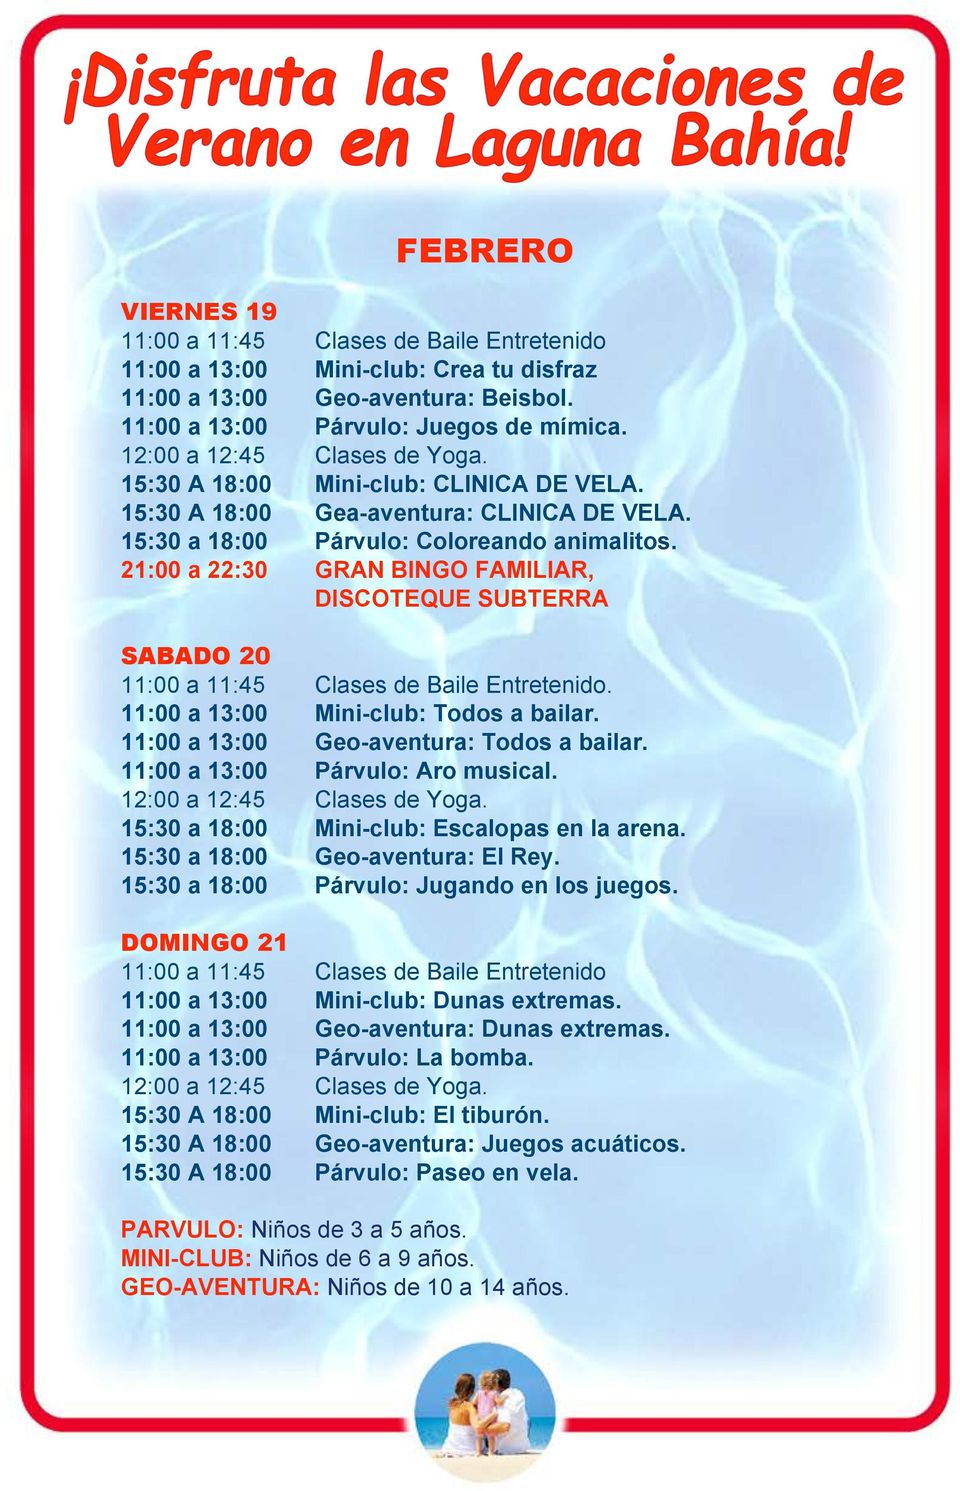 11:00 a 13:00 Geo-aventura: Todos a bailar. 11:00 a 13:00 Párvulo: Aro musical. 15:30 a 18:00 Mini-club: Escalopas en la arena. 15:30 a 18:00 Geo-aventura: El Rey.